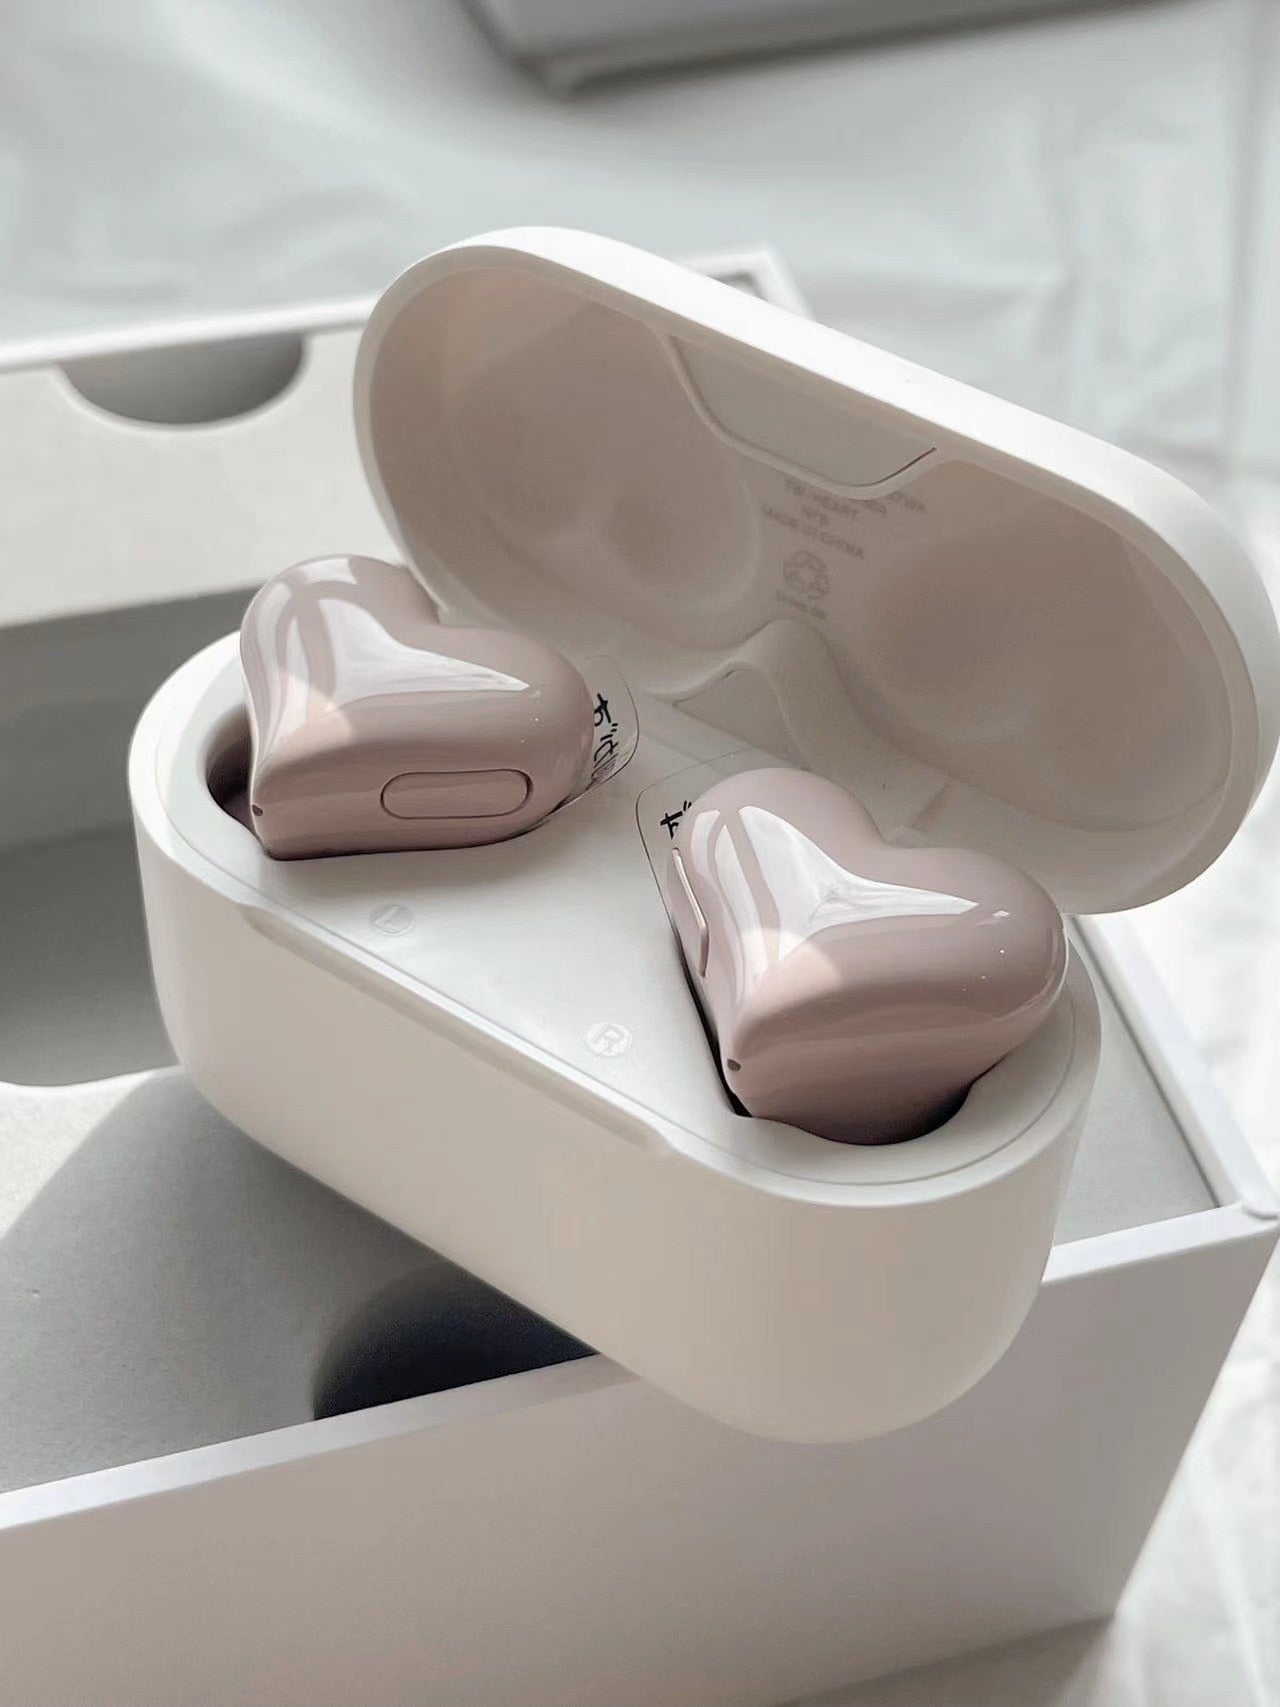 New Original Bluetooth Wireless Headphones Heart Shaped Earphones woman Earphone High Quality Heart Earbuds Girl Gift